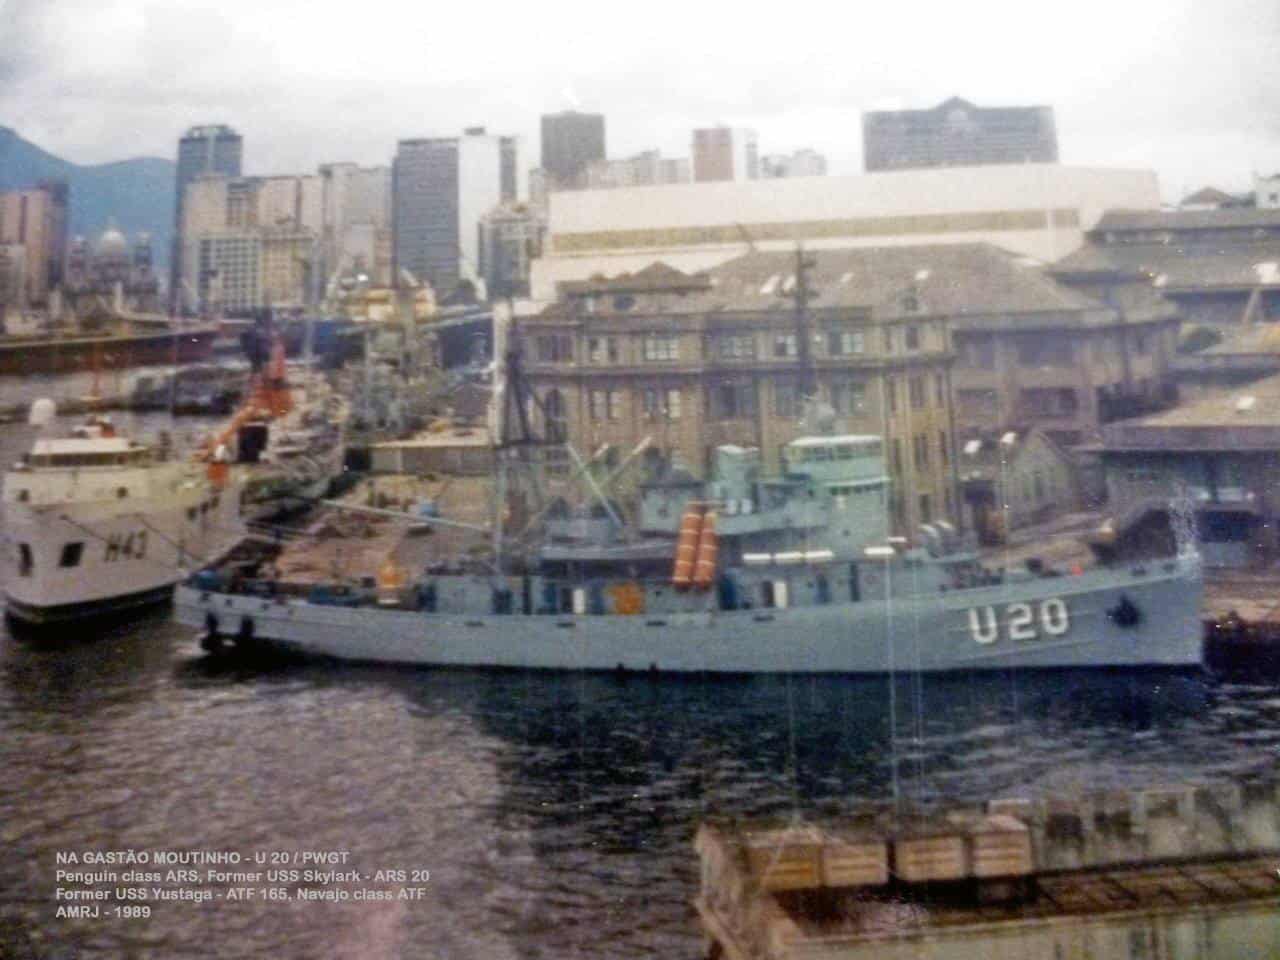 Пошукове судно USS Skylark